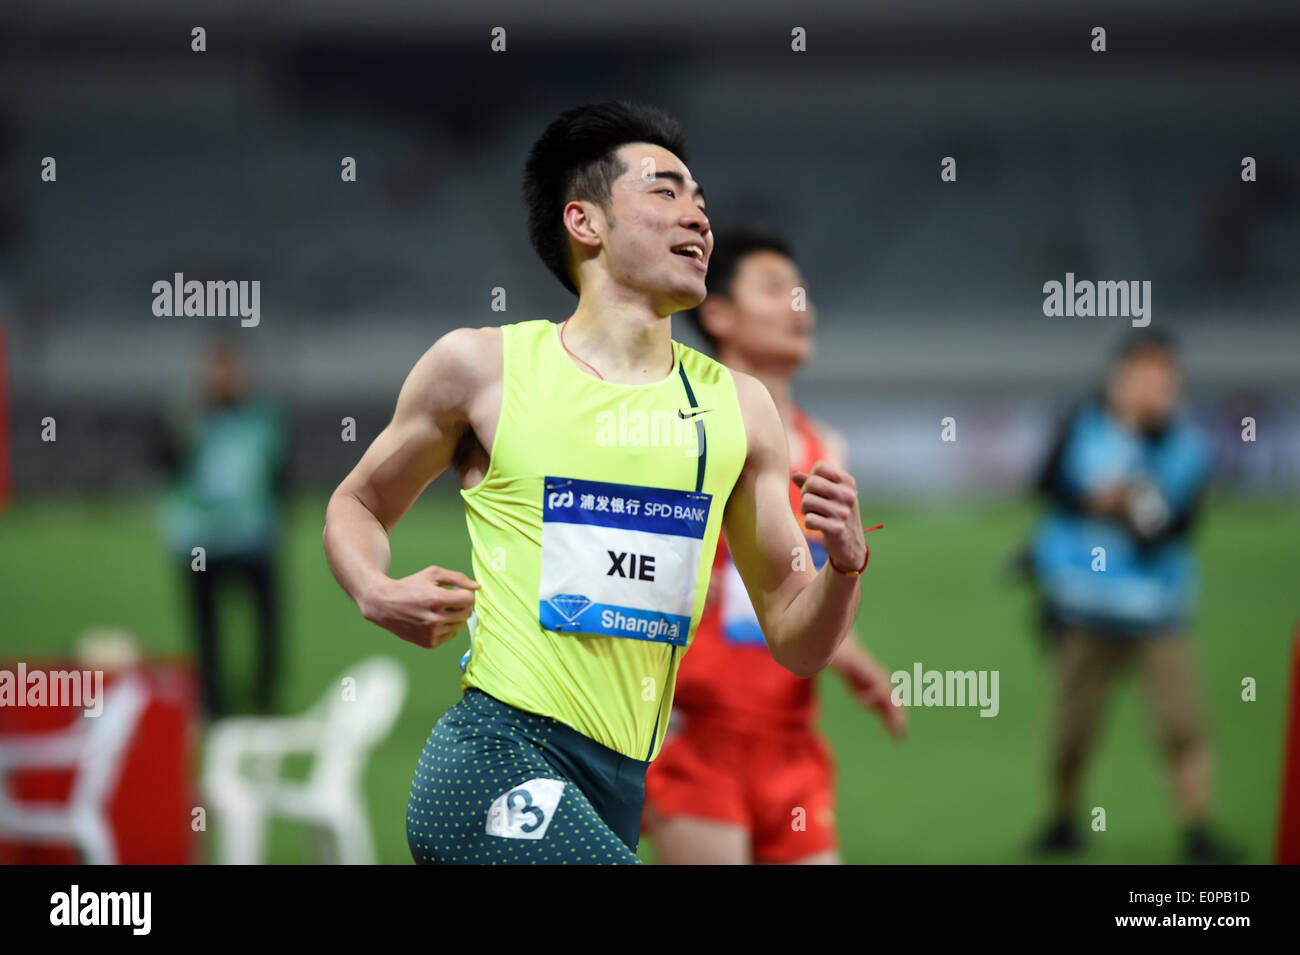 Shanghai, China. 18th May, 2014. China's Xie Wenjun corsses the finish line during the men's 110m hurdles race at the IAAF Diamond League Athletics in Shanghai, east China, May 18, 2014. © Li Jundong/Xinhua/Alamy Live News Stock Photo